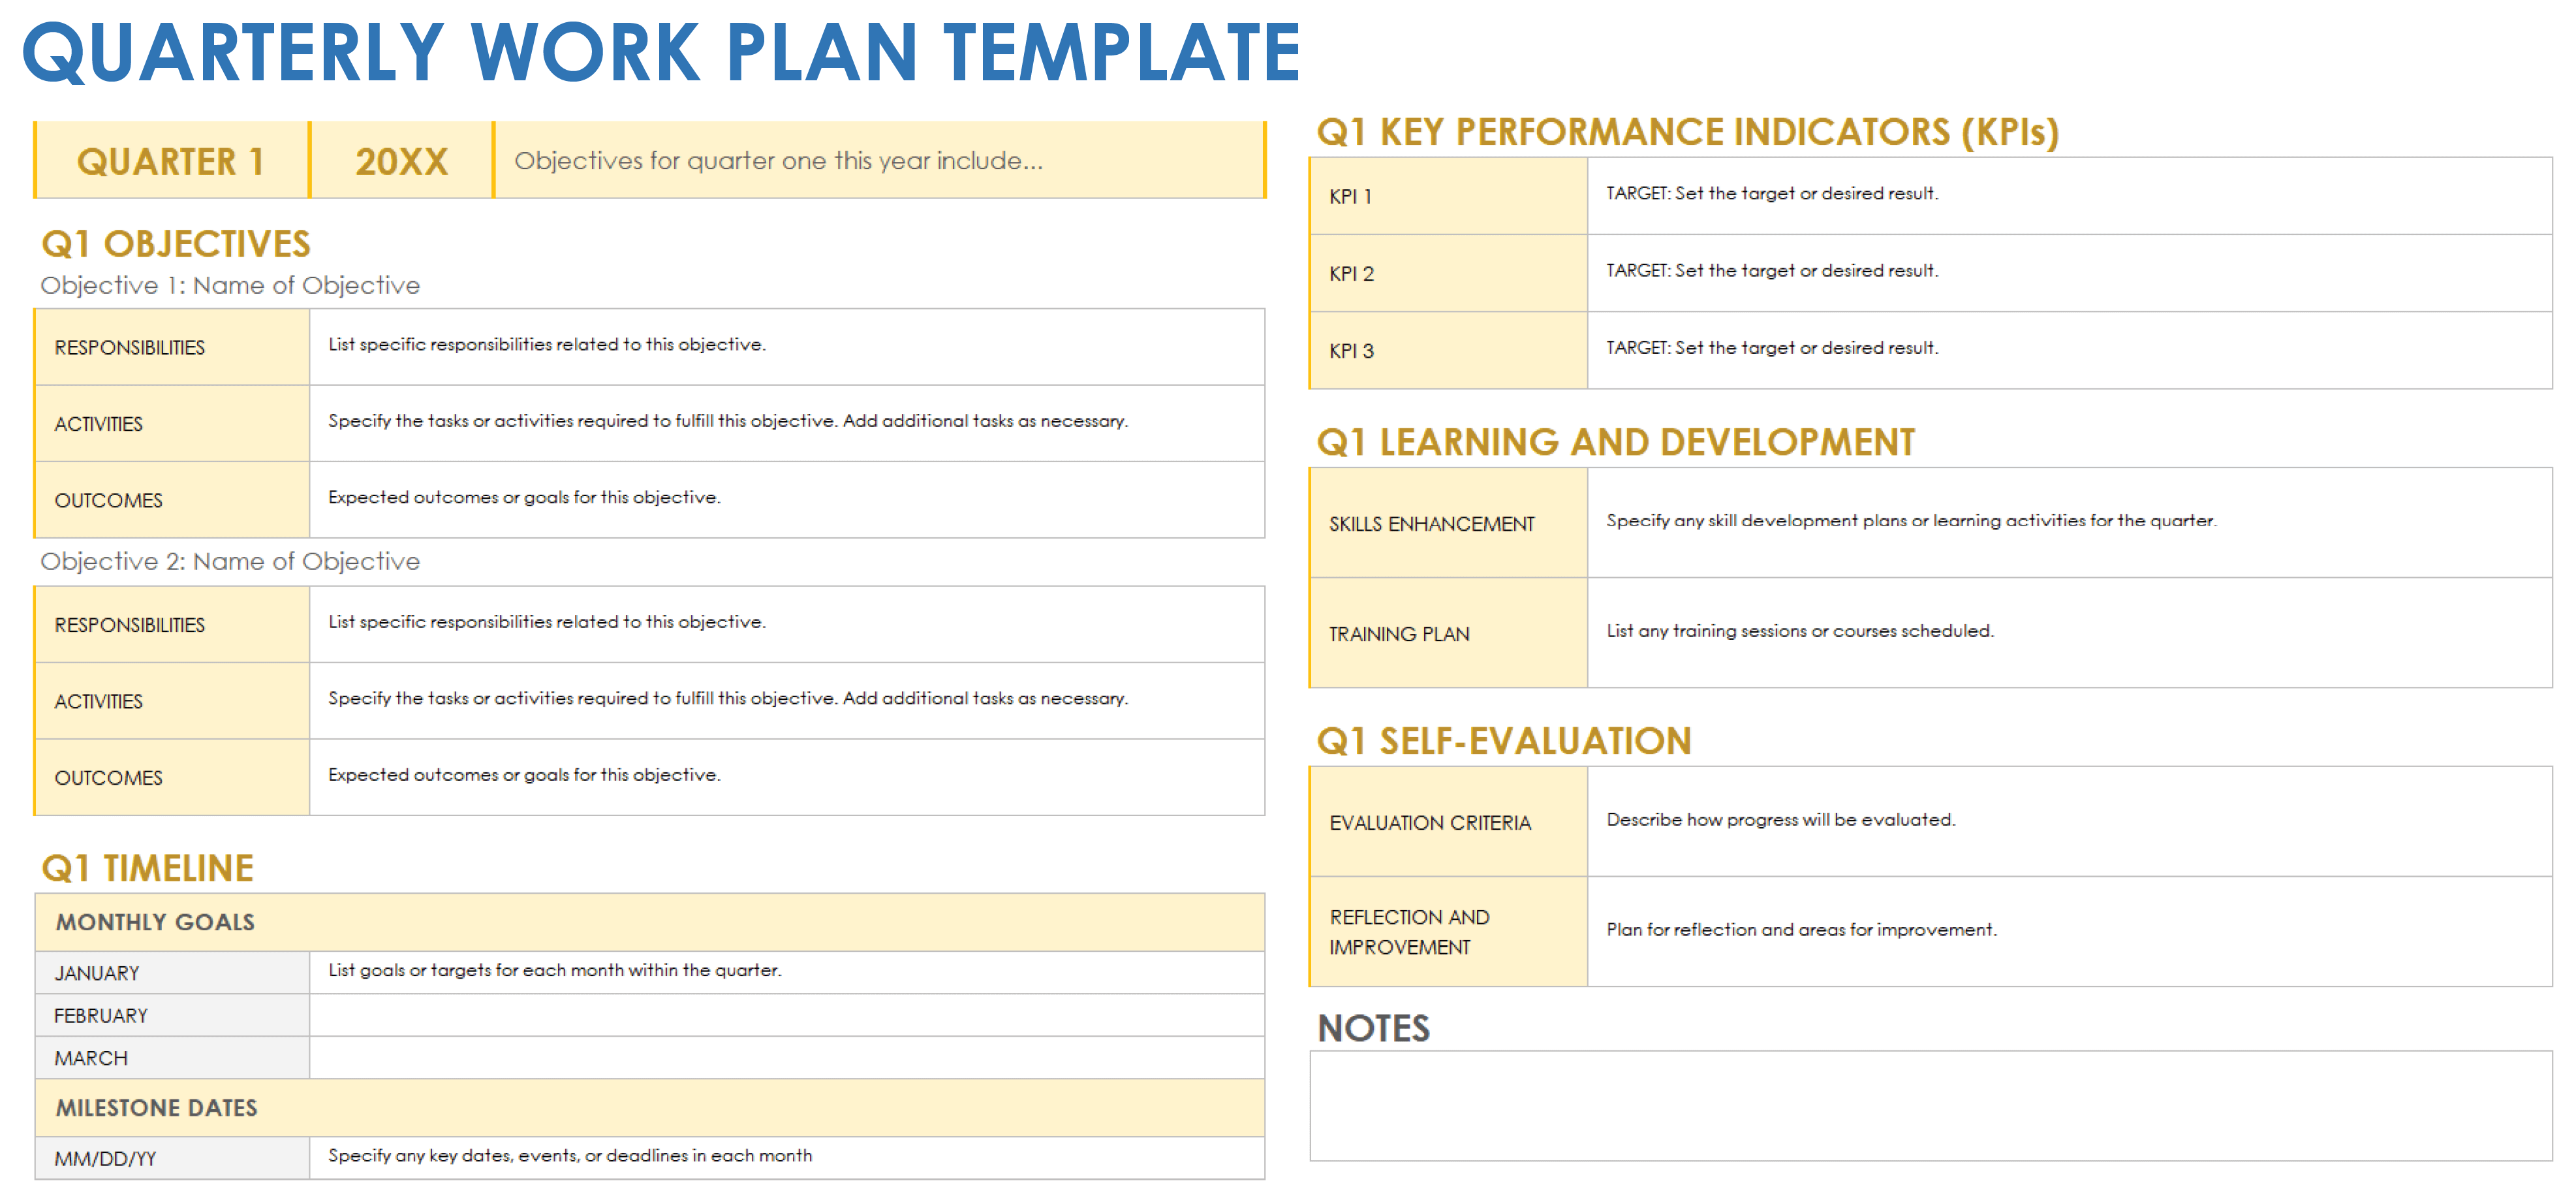 Quarterly Work Plan Template